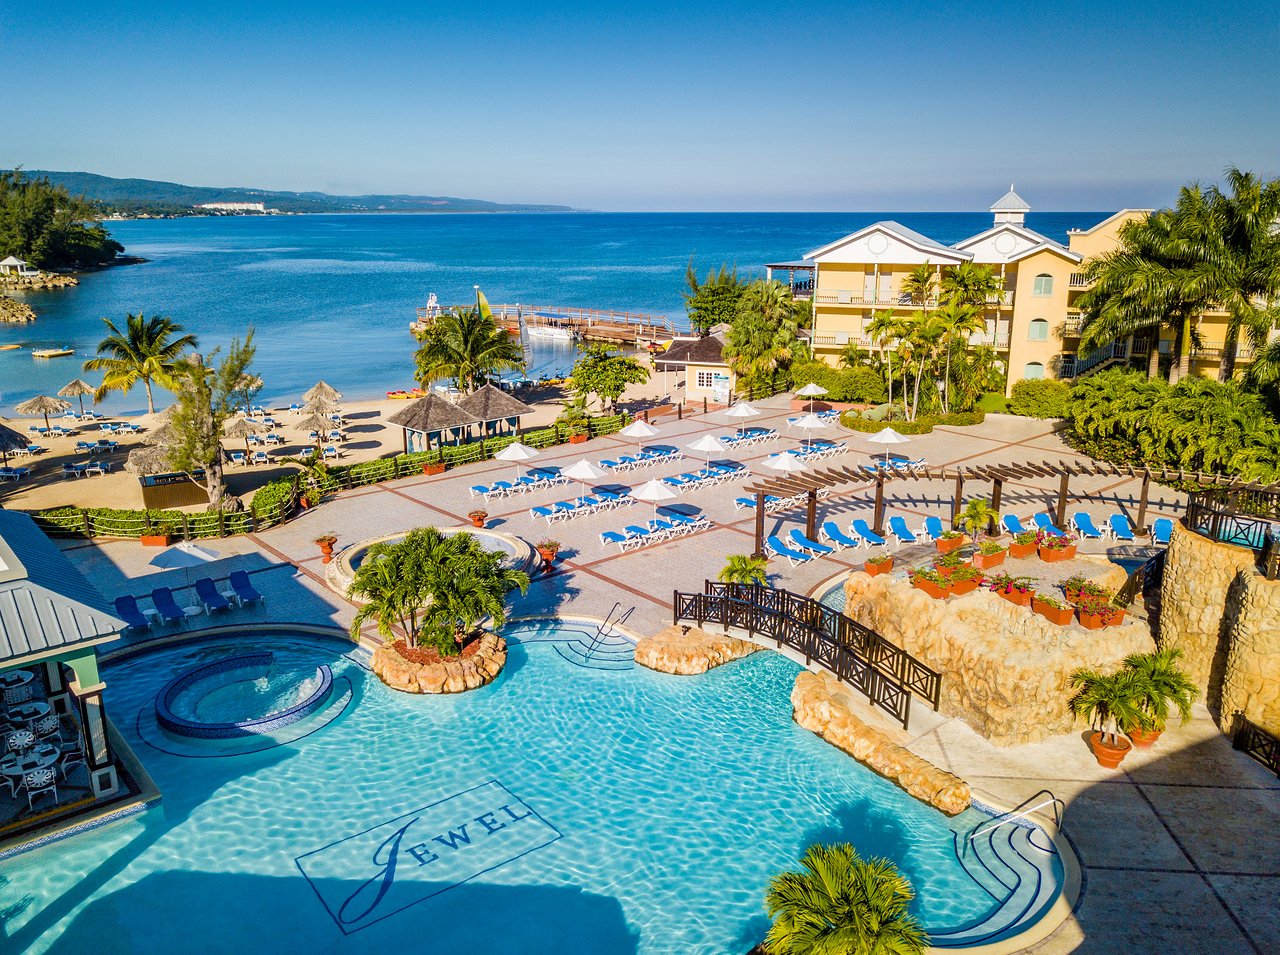 Best Hotels & Resorts near Blue Hole, Ocho Rios Jamaica